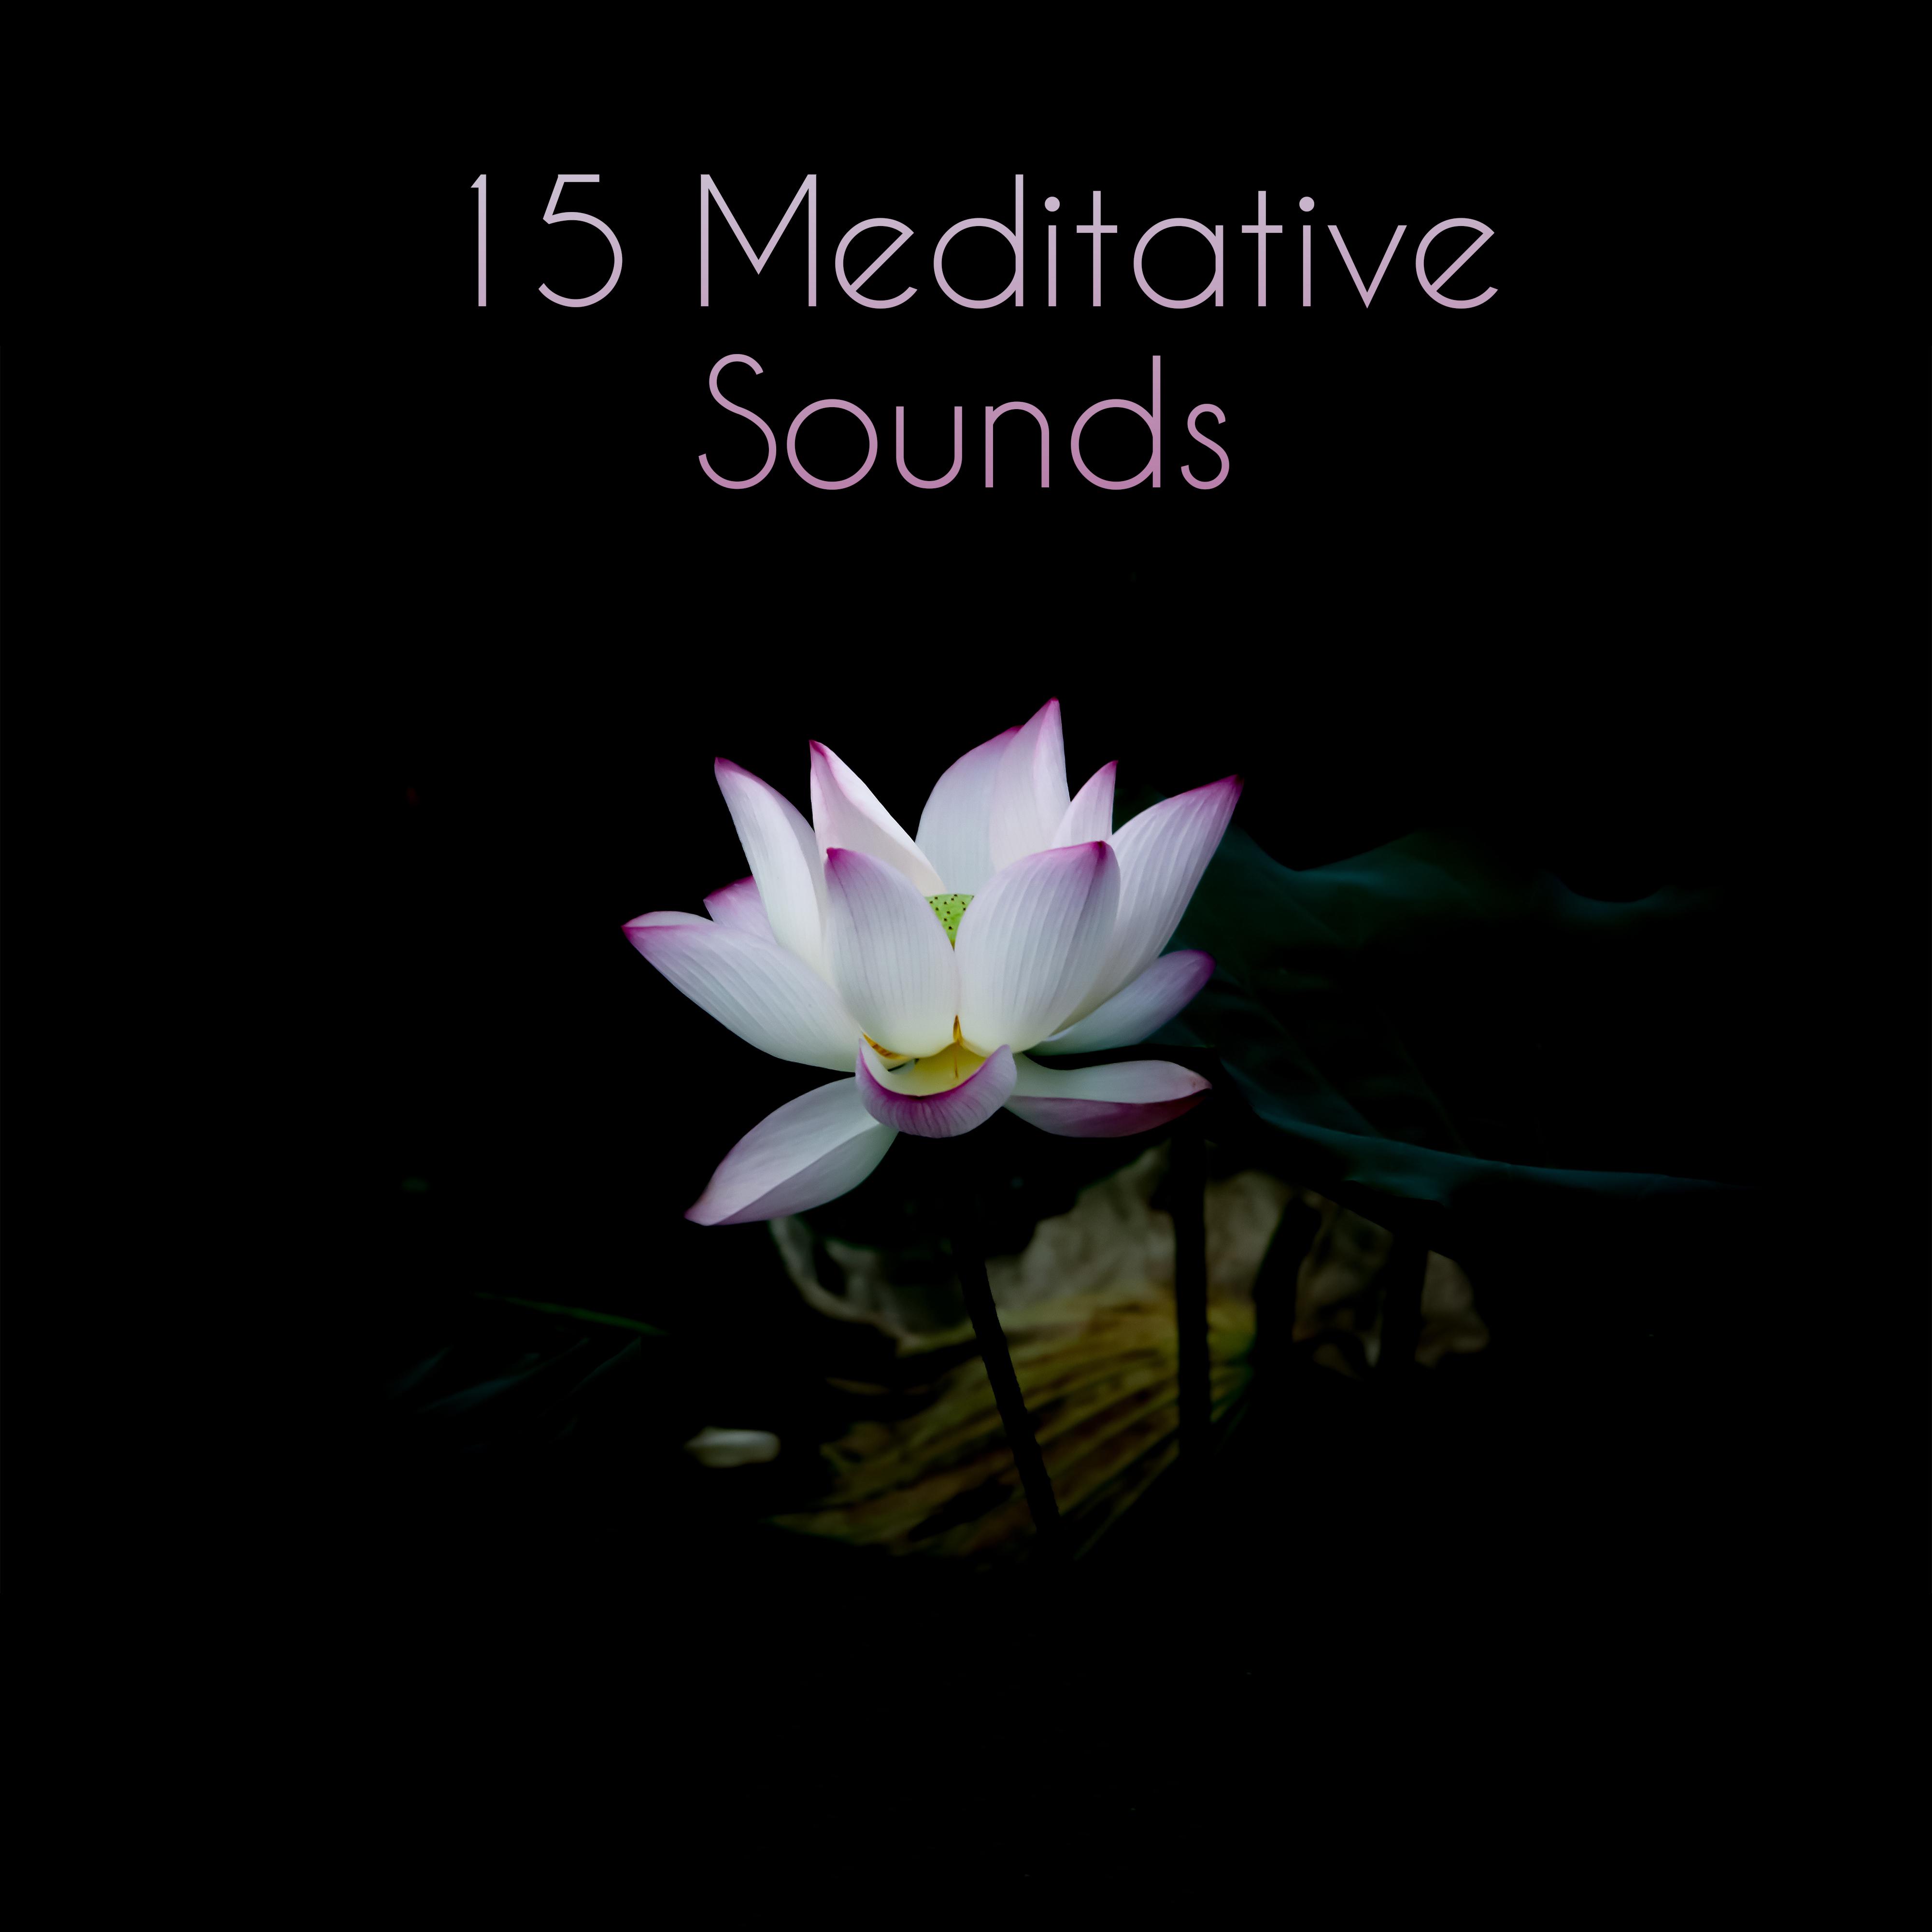 15 Meditative Sounds  Relaxing Sounds for Yoga, Sleep, Healing Meditation, Reduce Stress, Calm Down, Deep Harmony, New Age Music, Inner Silence